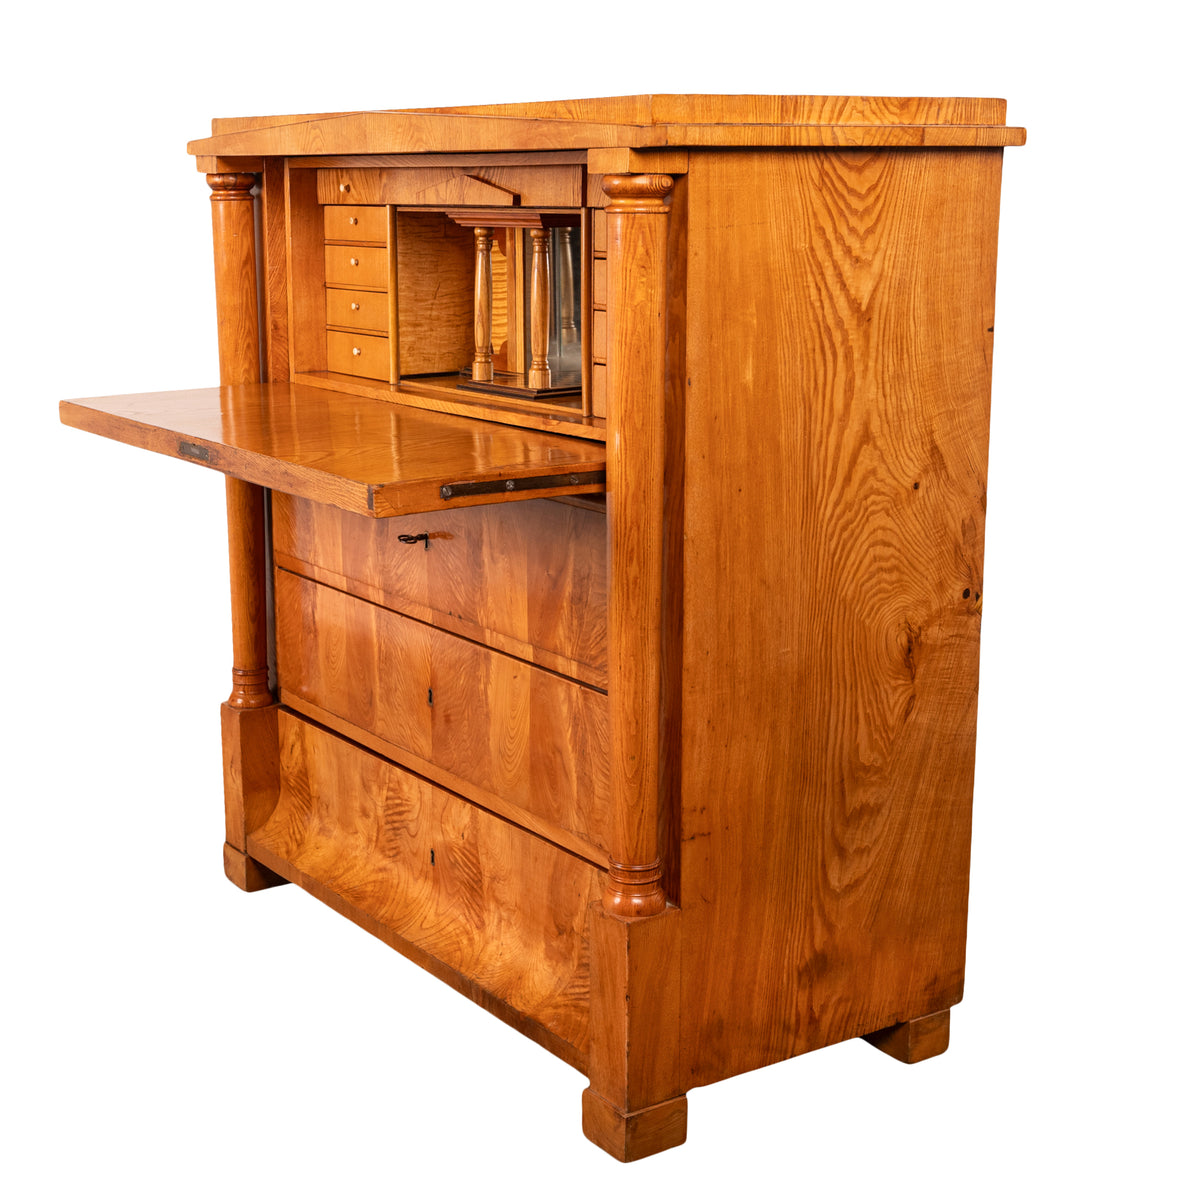 Antique Swedish Golden Ash Biedermeier Secretary Chest Dresser Desk inlaid 1820